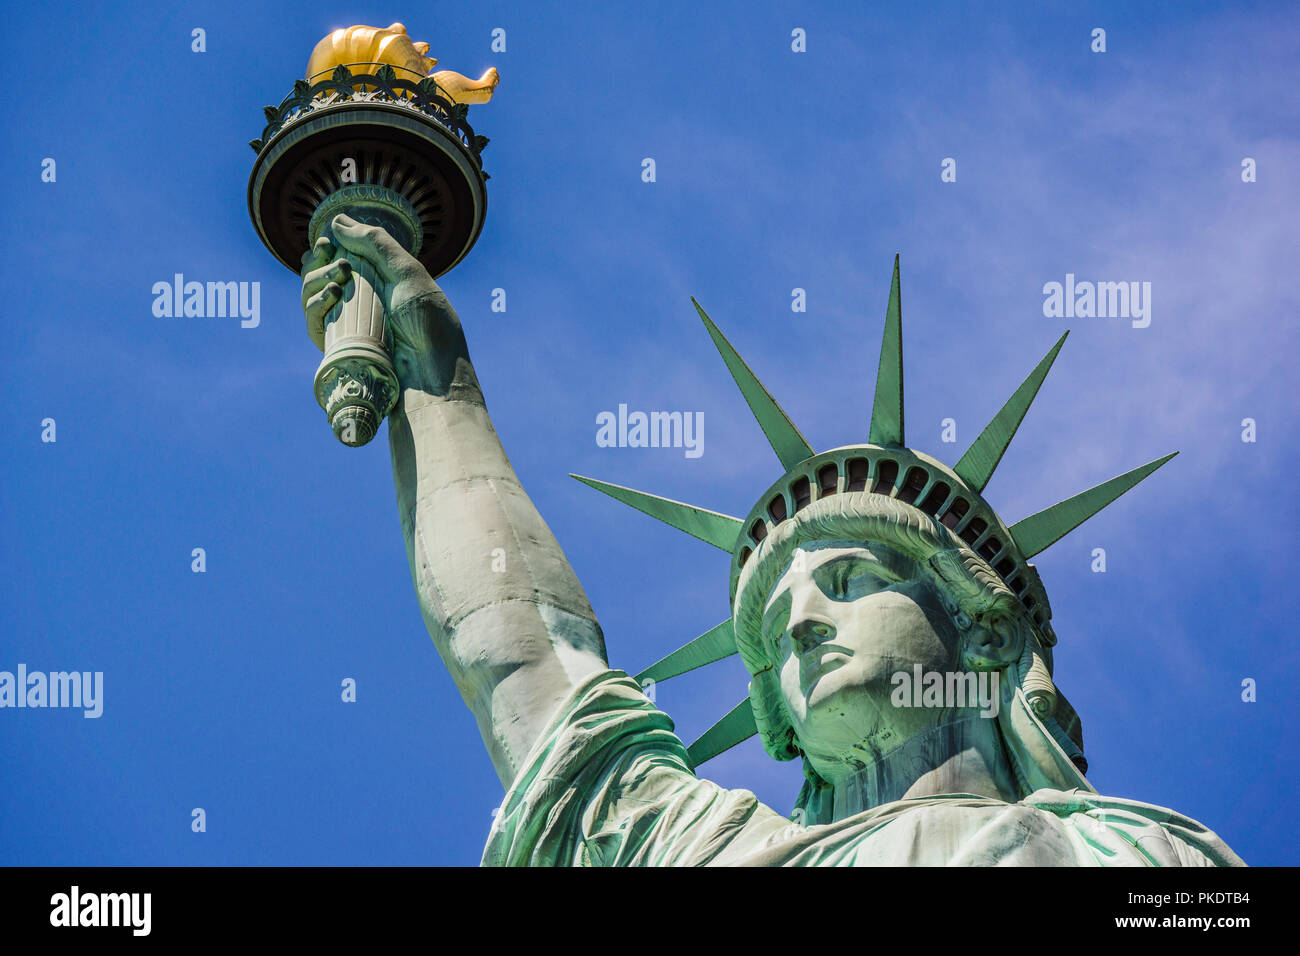 Statue Of Liberty Enlightening The World Liberty Island New York New